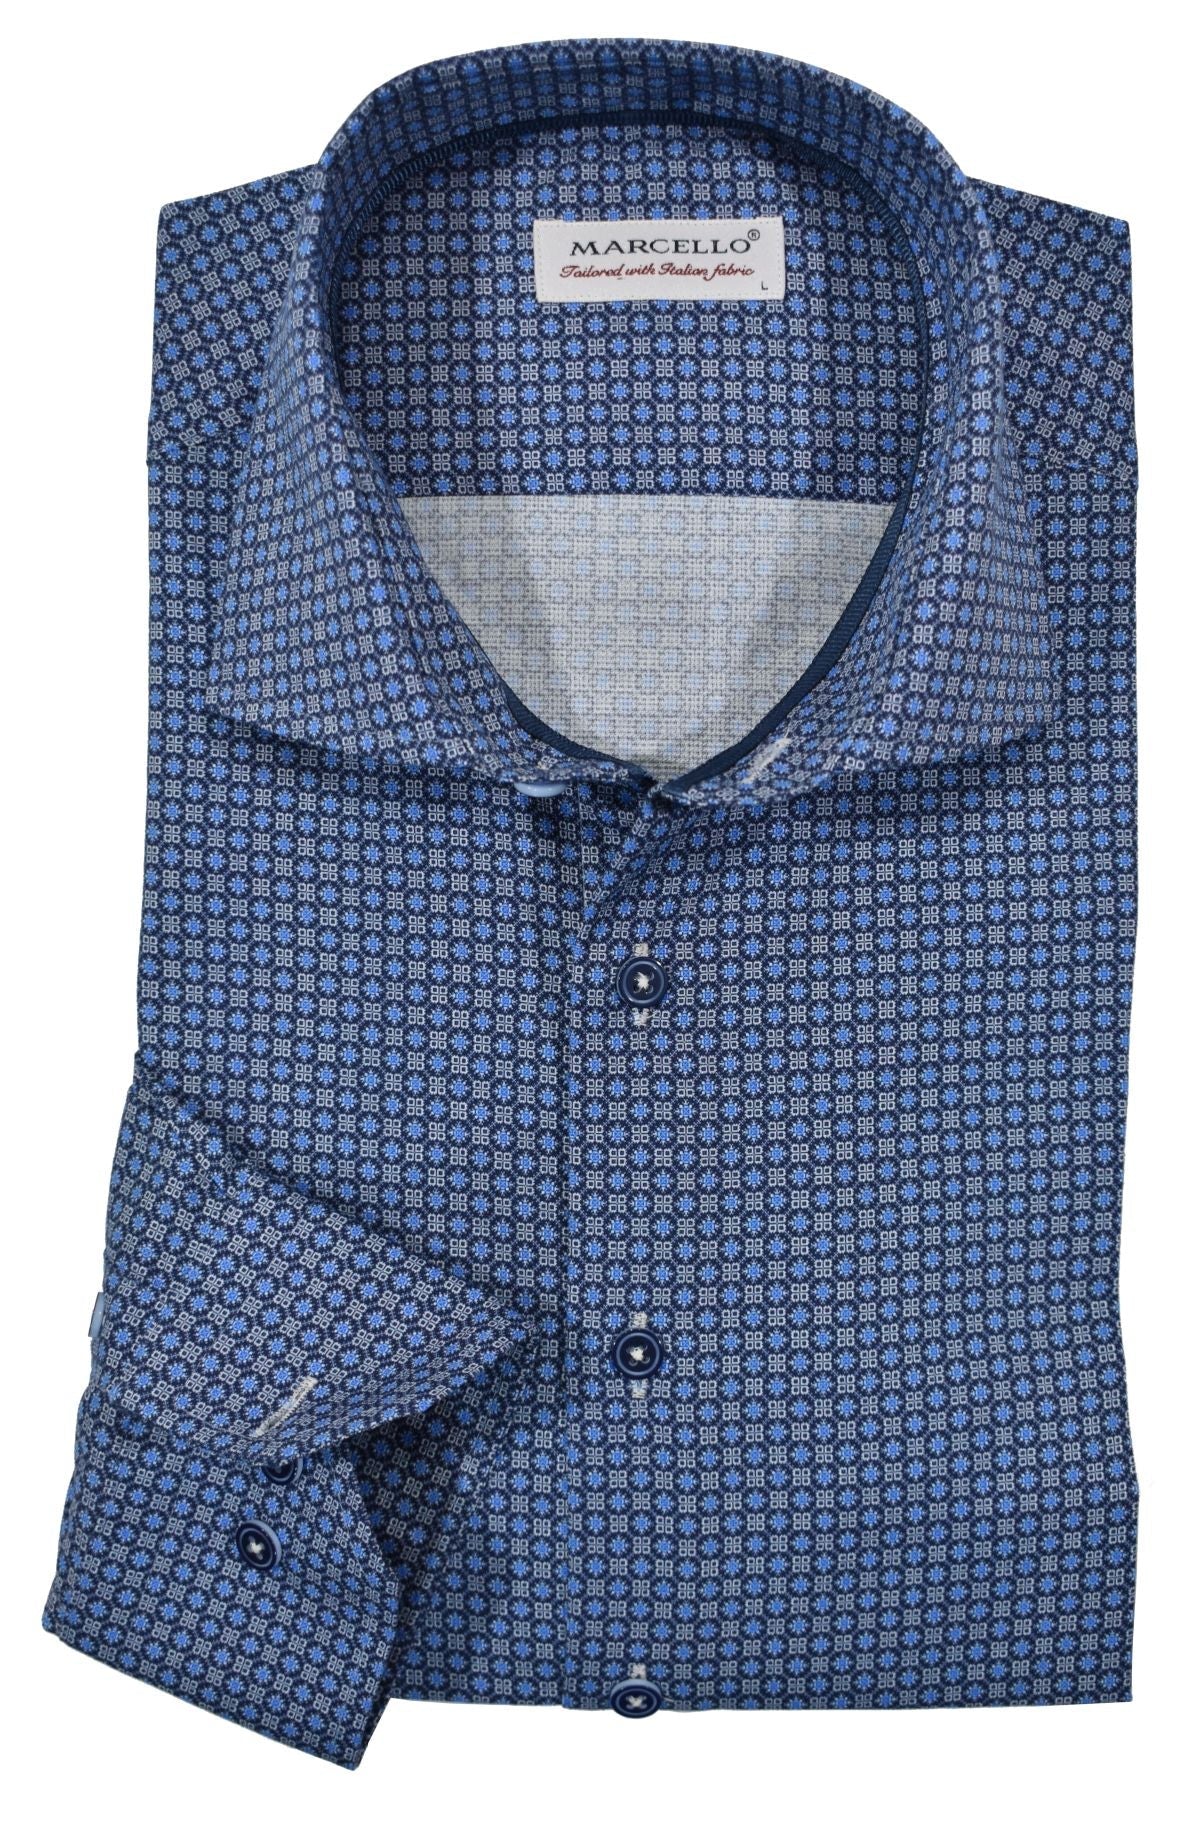 CM0W753 - Cuadra blue casual fashion cotton shirt for men-Kuet.us